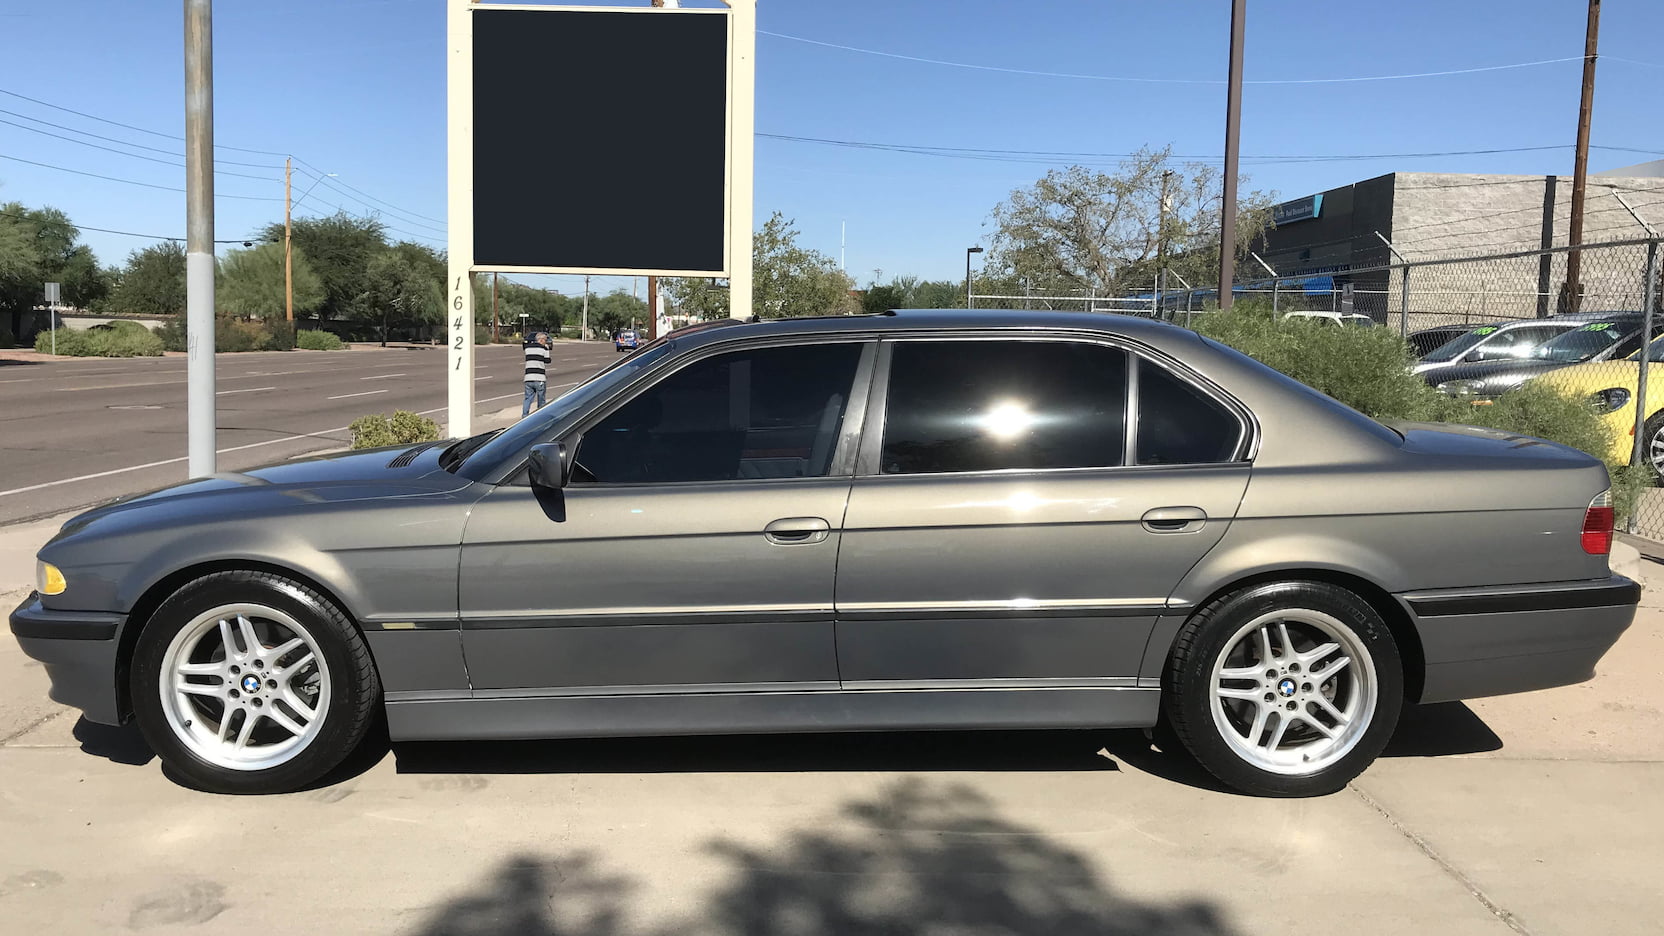 2001 BMW 740il | T111 | Phoenix • Glendale 2019